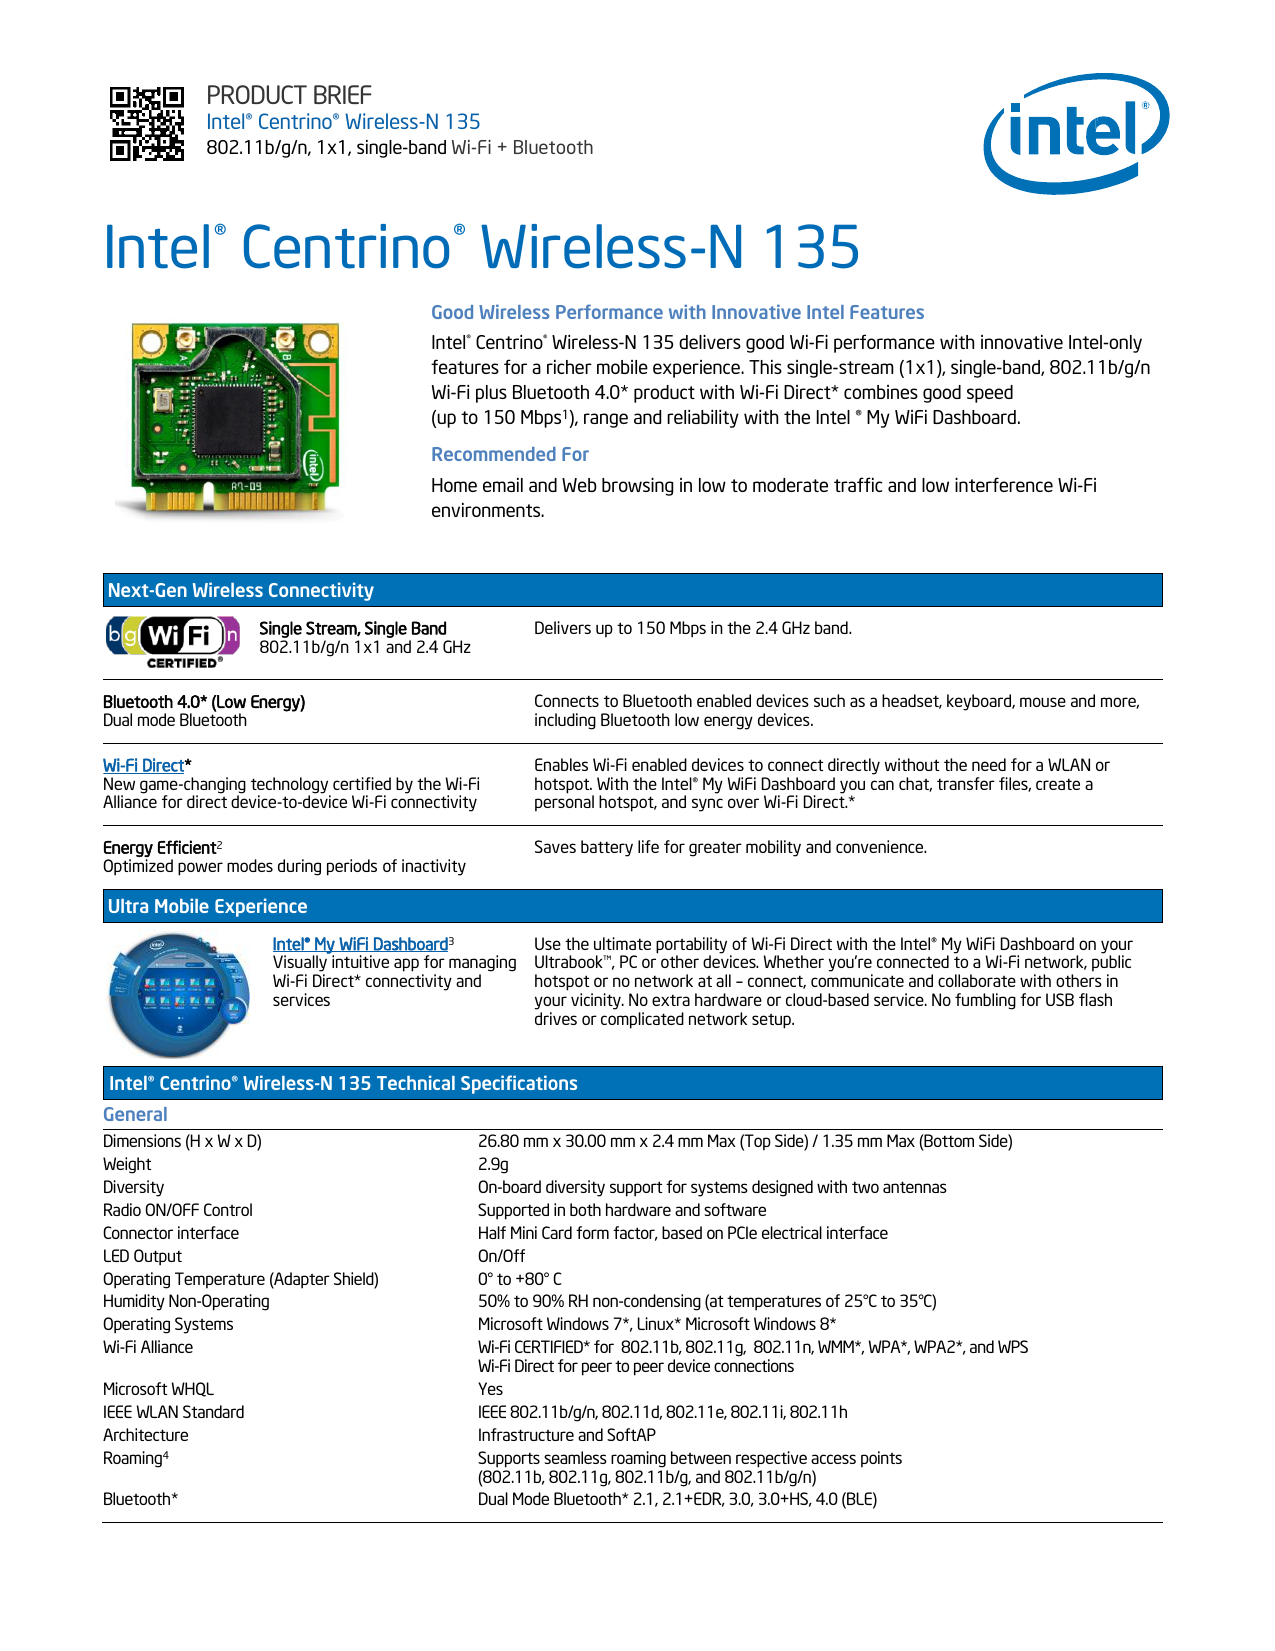 centrino wireless n 2230 specs